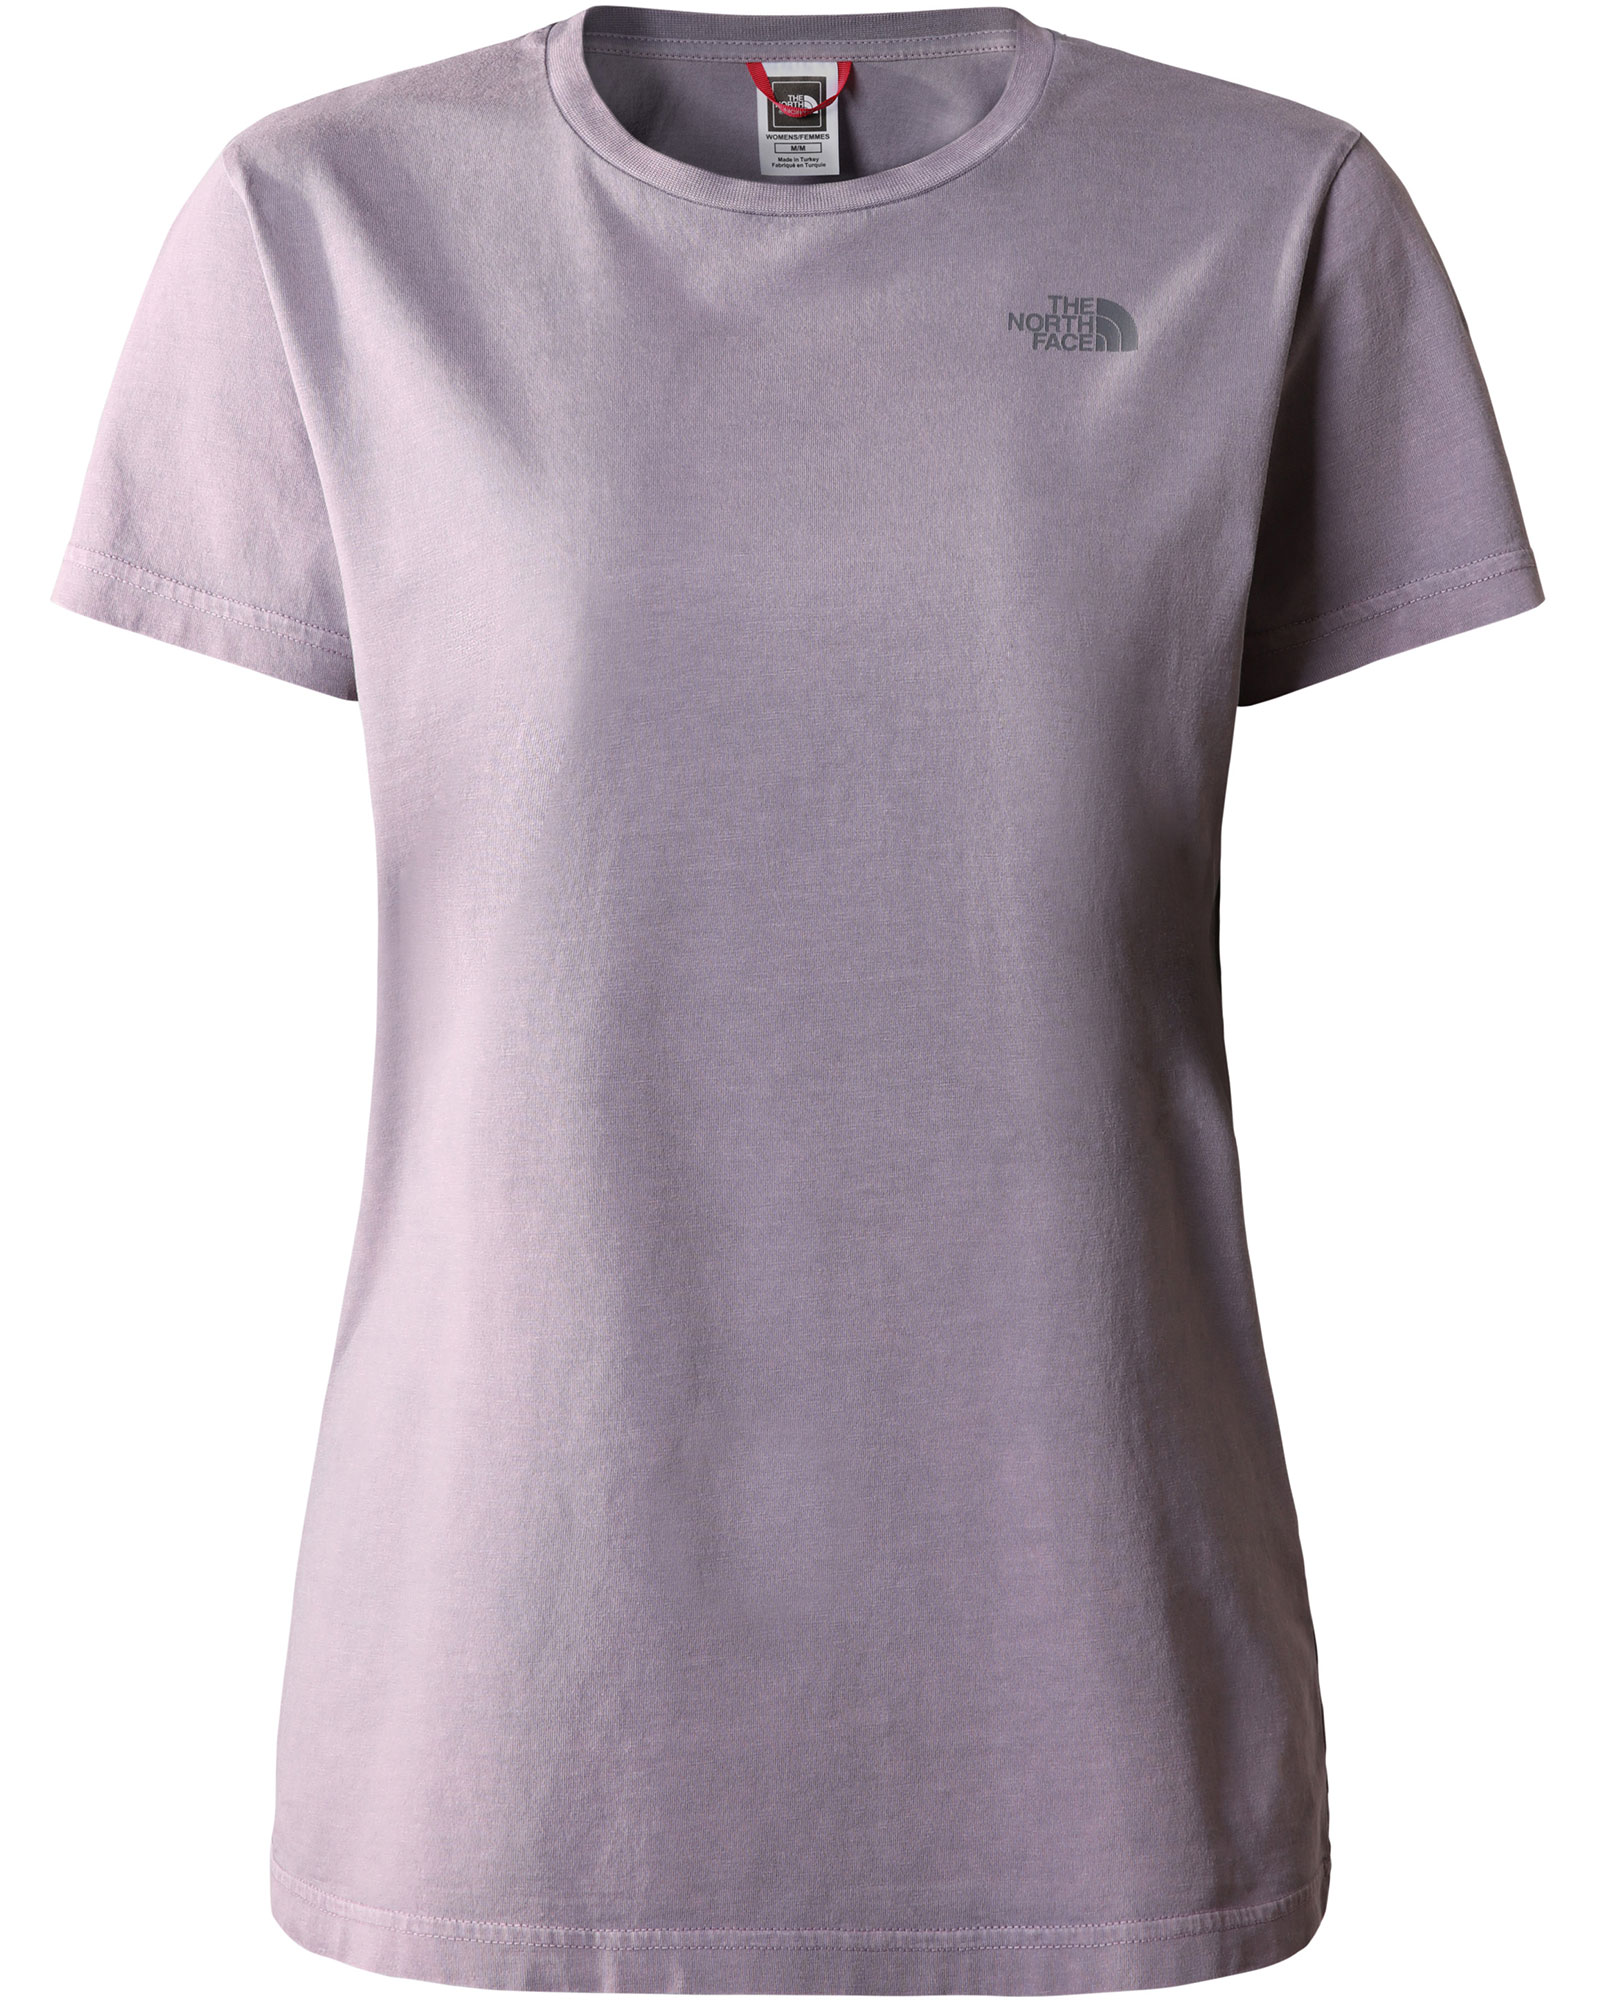 The North Face Women’s Heritage Dye Pack Logowear T Shirt - Lunar Slate XS